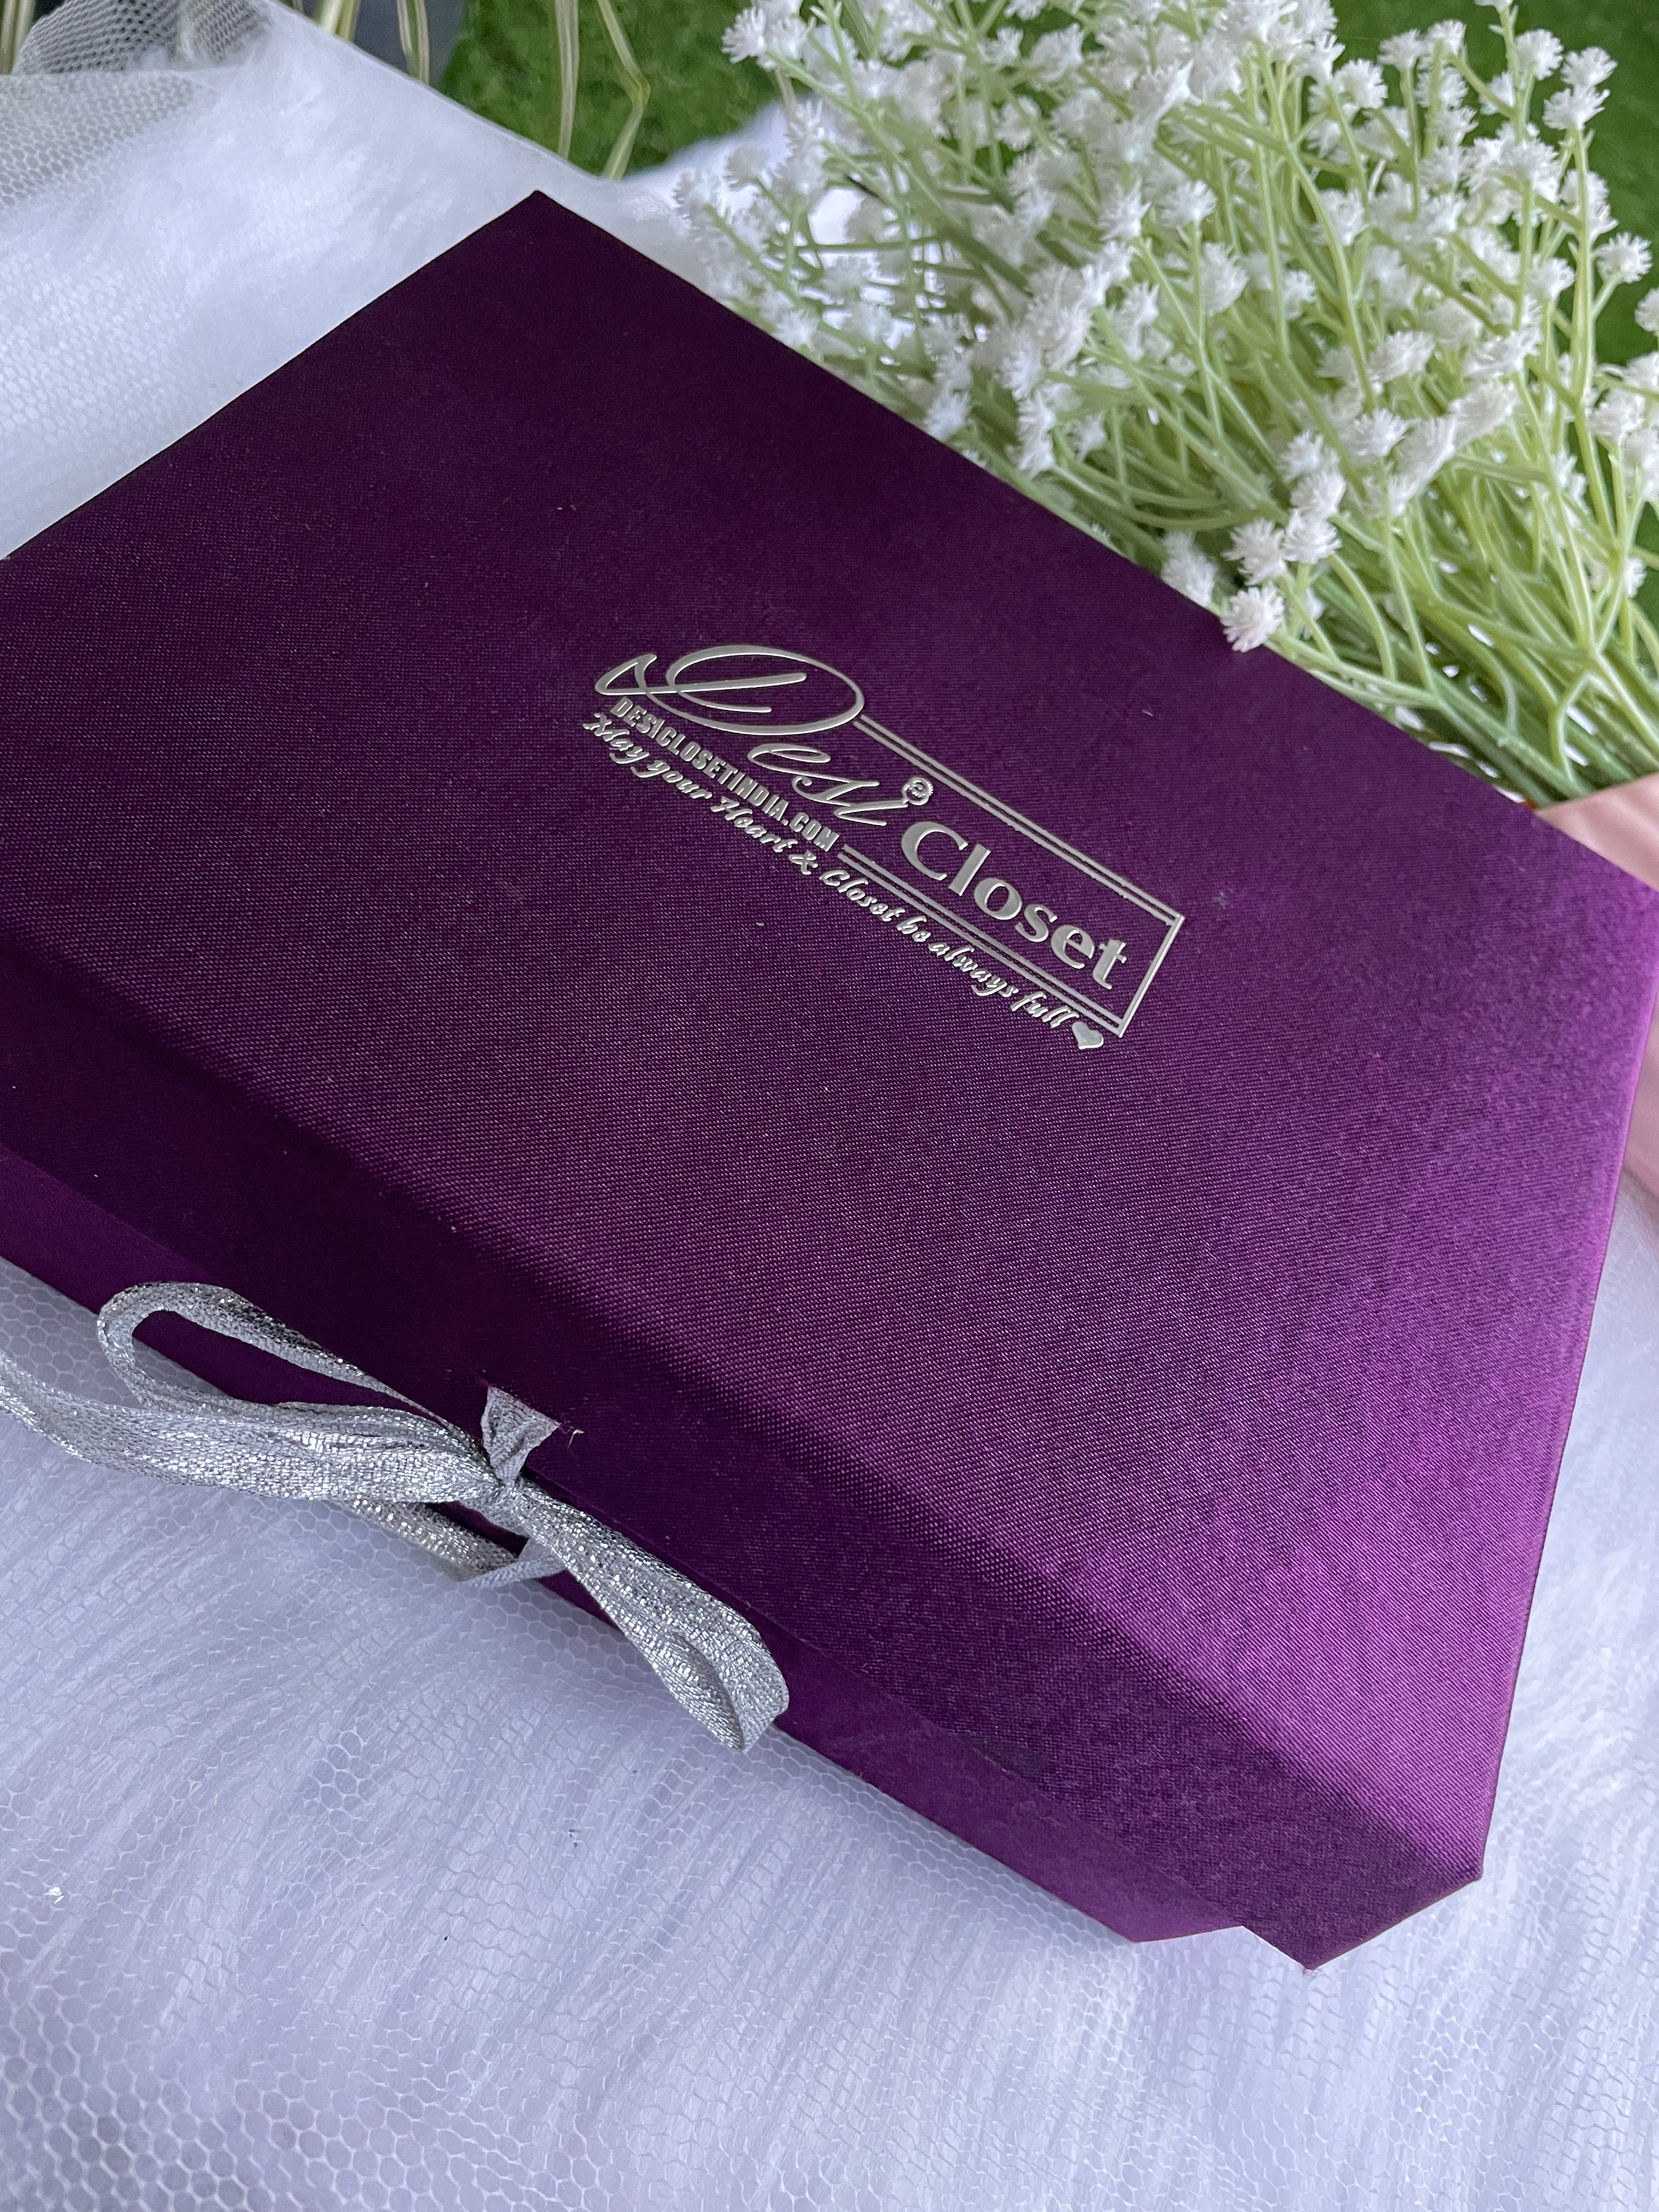 The Desi Gift Box ( Only Box) - Desi Closet